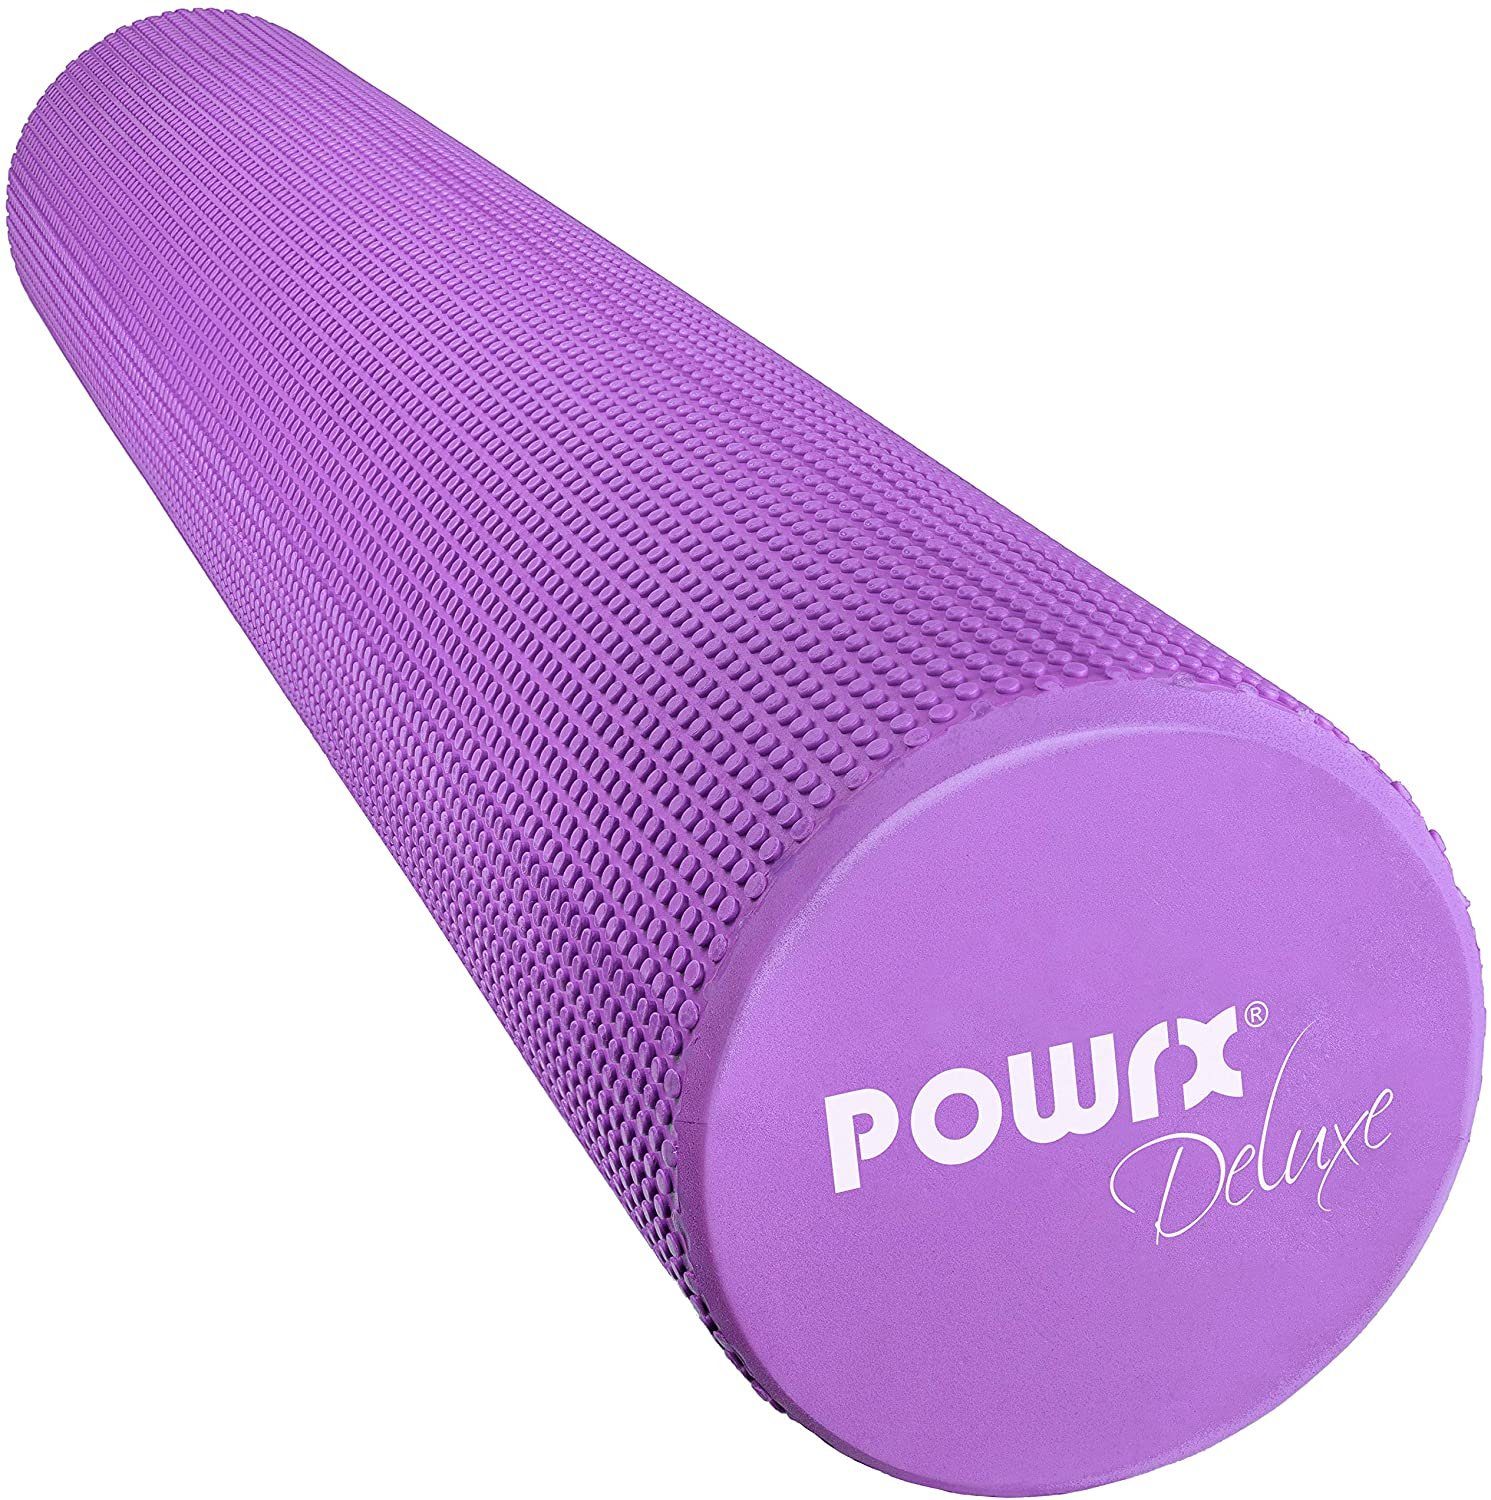 POWRX Pilatesrolle Yoga-/Pilates-/Schaumstoff-Roller Faszien-Training, 45/90cm - 90 Cm für X Pink 15